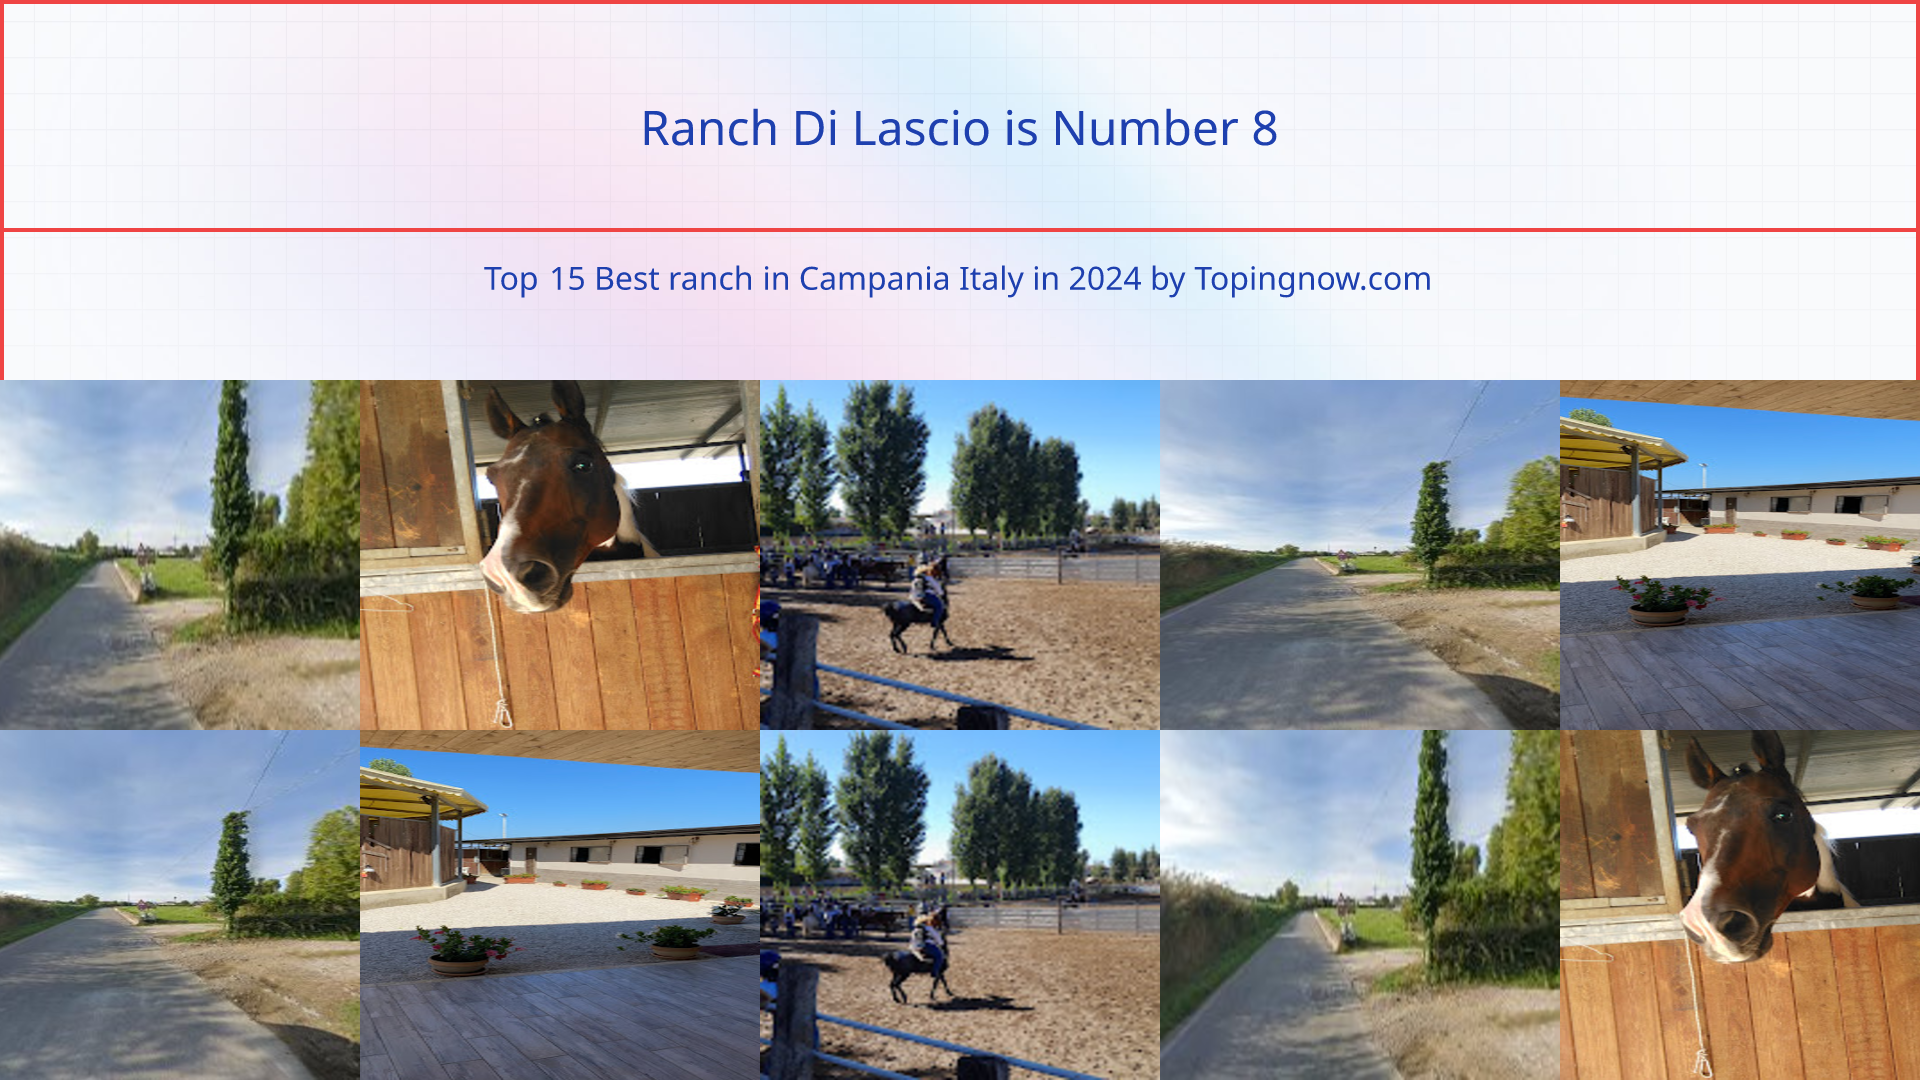 Ranch Di Lascio: Top 15 Best ranch in Campania Italy in 2024